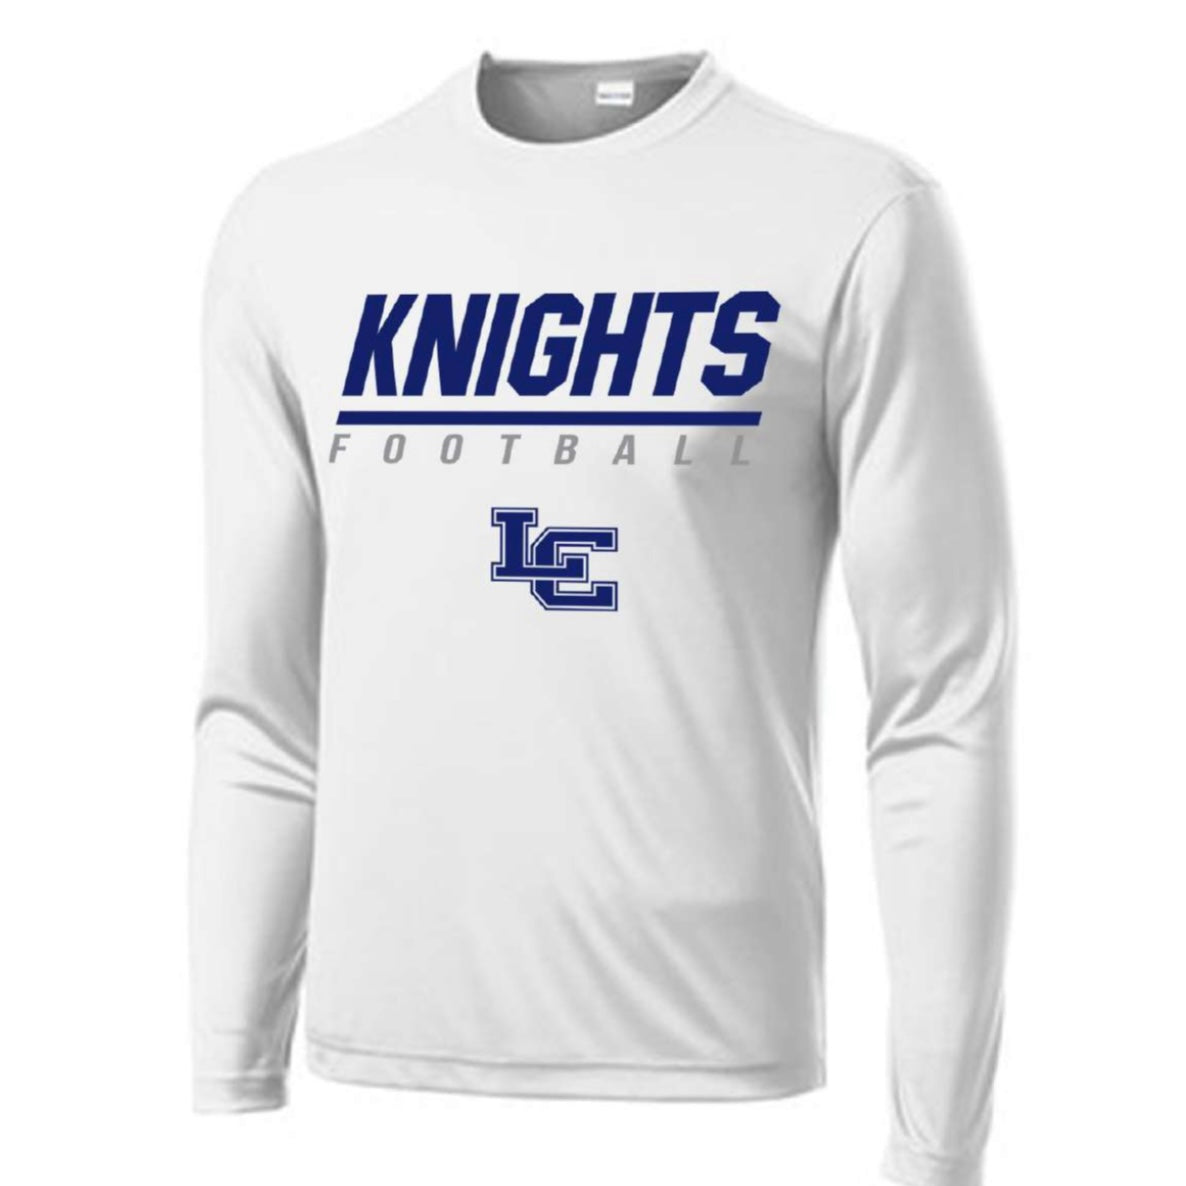 Knights Football - Sport Tek Dry Fit Long Sleeve T-Shirt - White